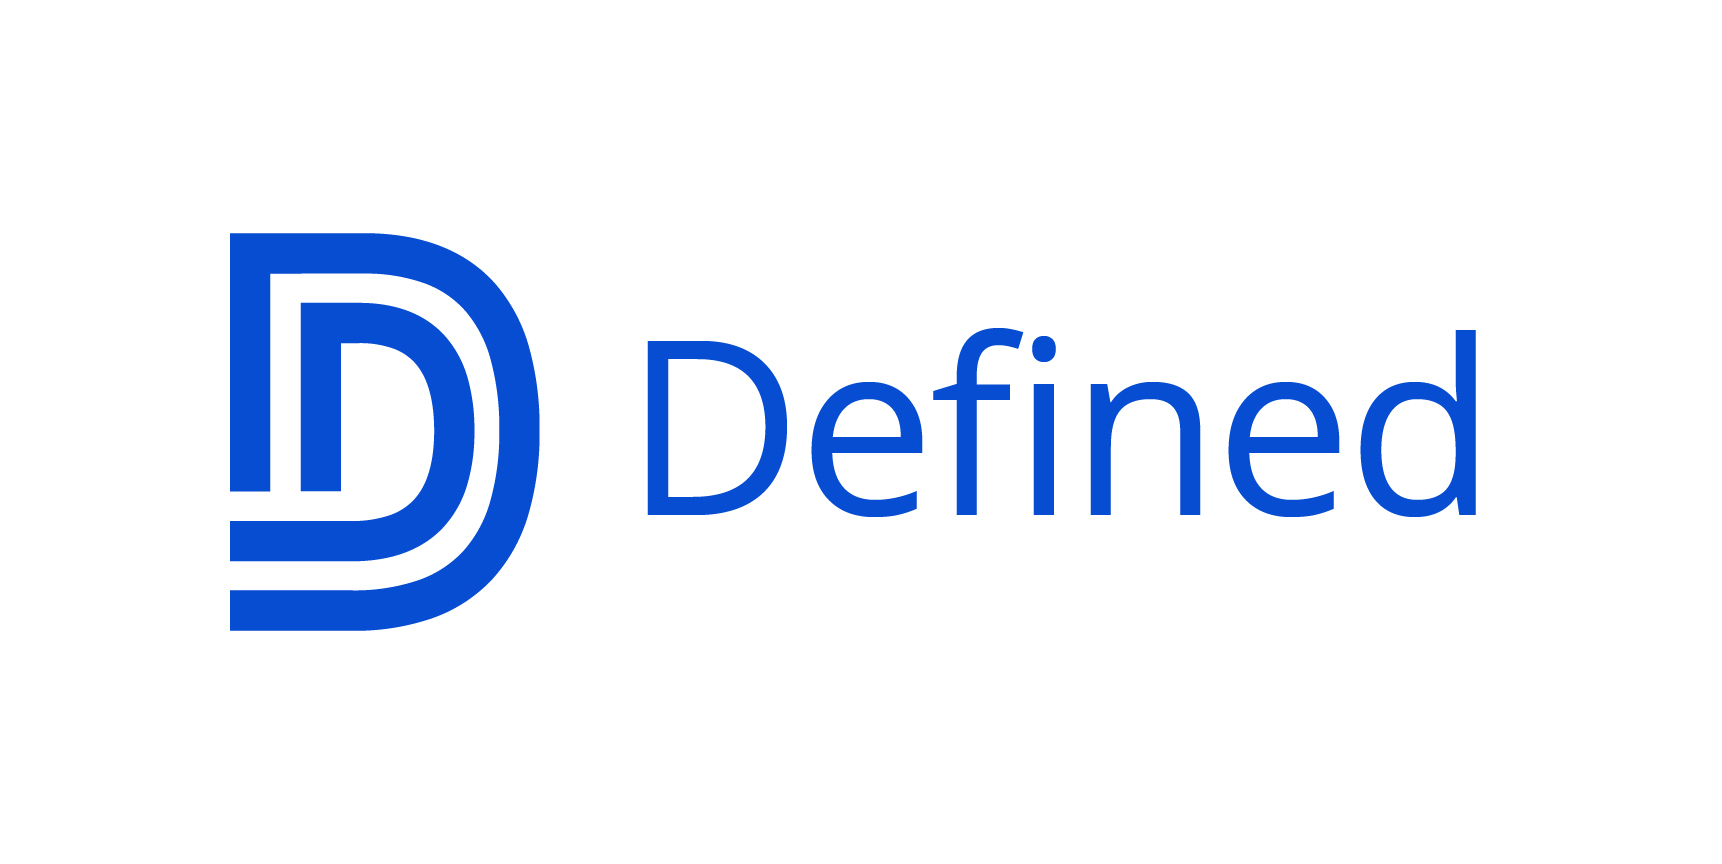 Defined Learning logo